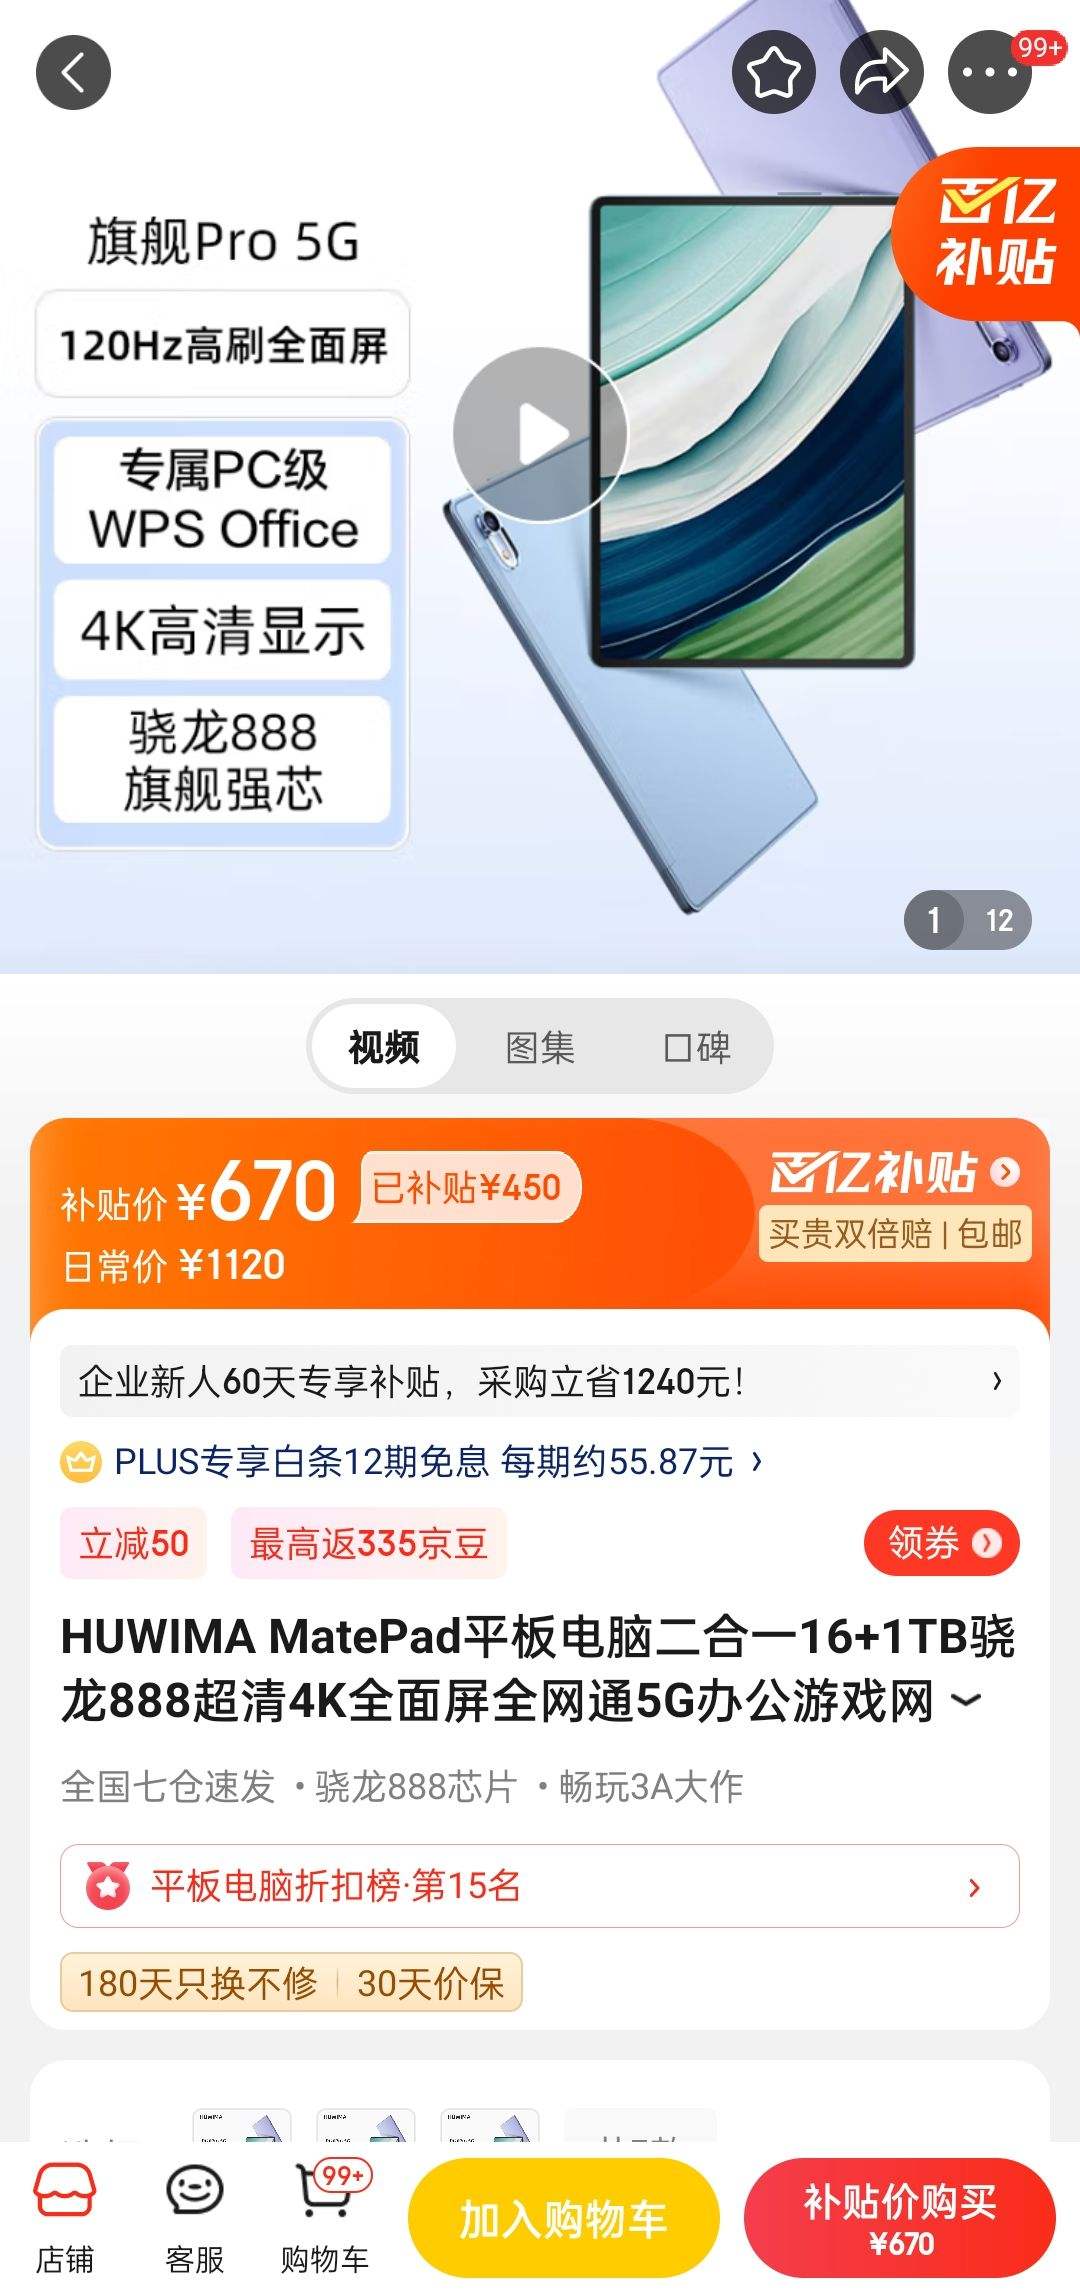 HUWIMA MatePad平板电脑二合一16+1TB 骁龙888-全利兔